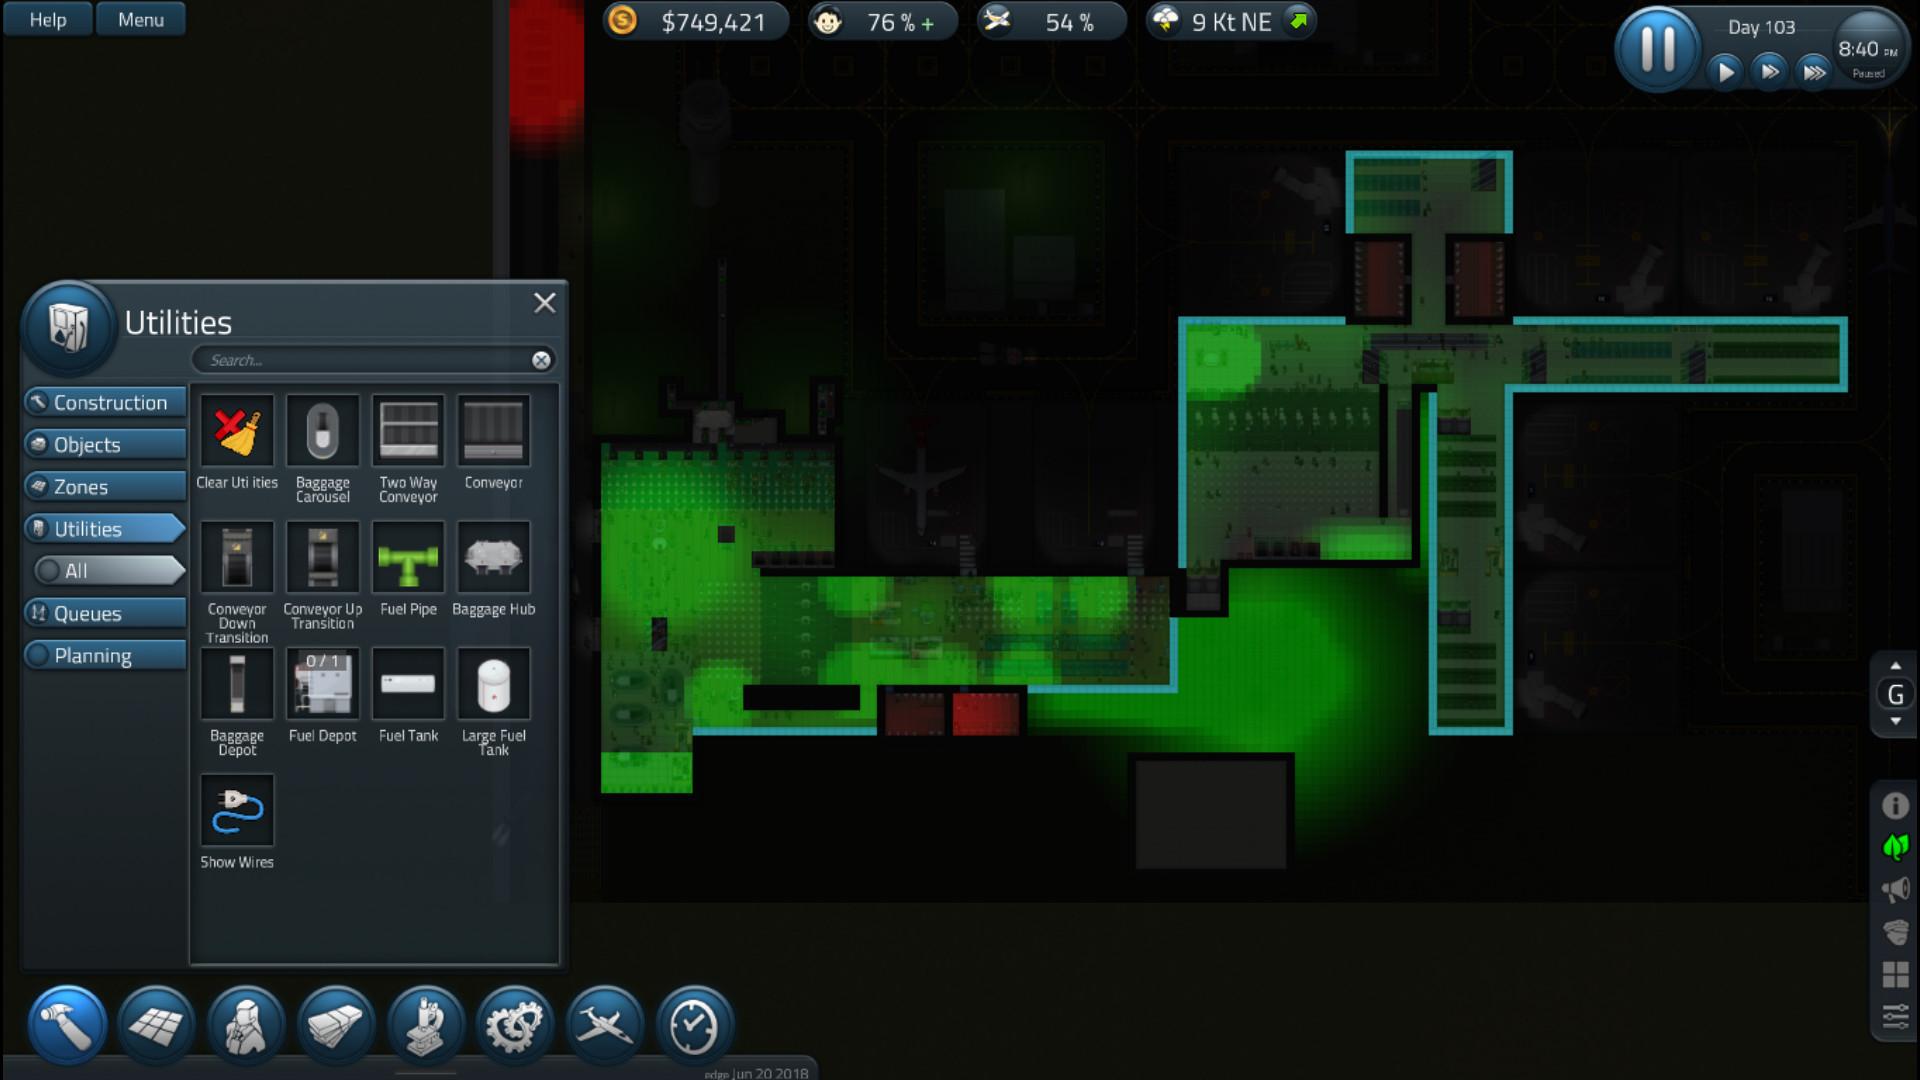 Screenshot №33 from game SimAirport